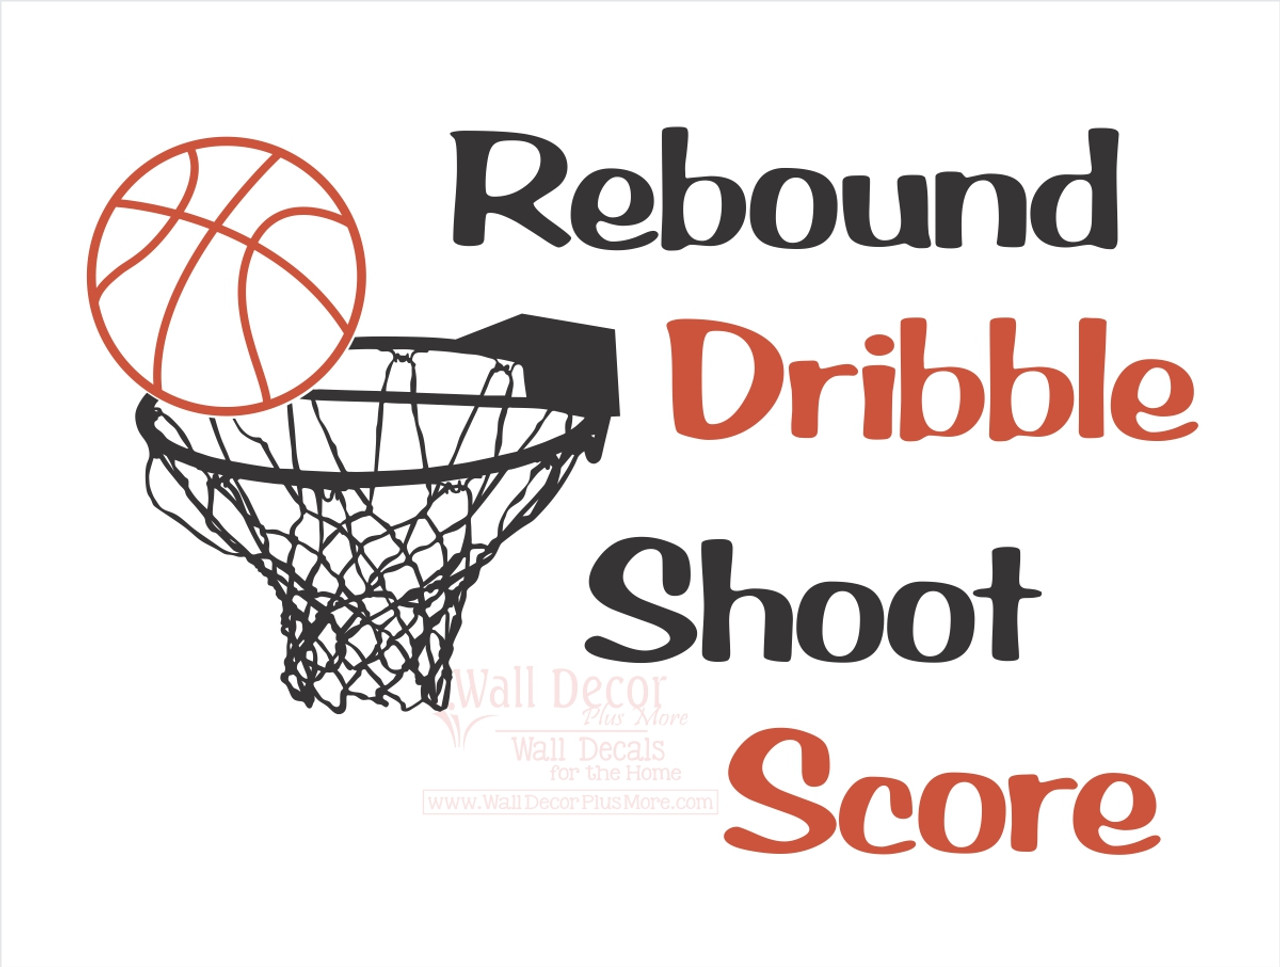 Rebound Dribble Shoot Score Basketball Sports Wall Decals